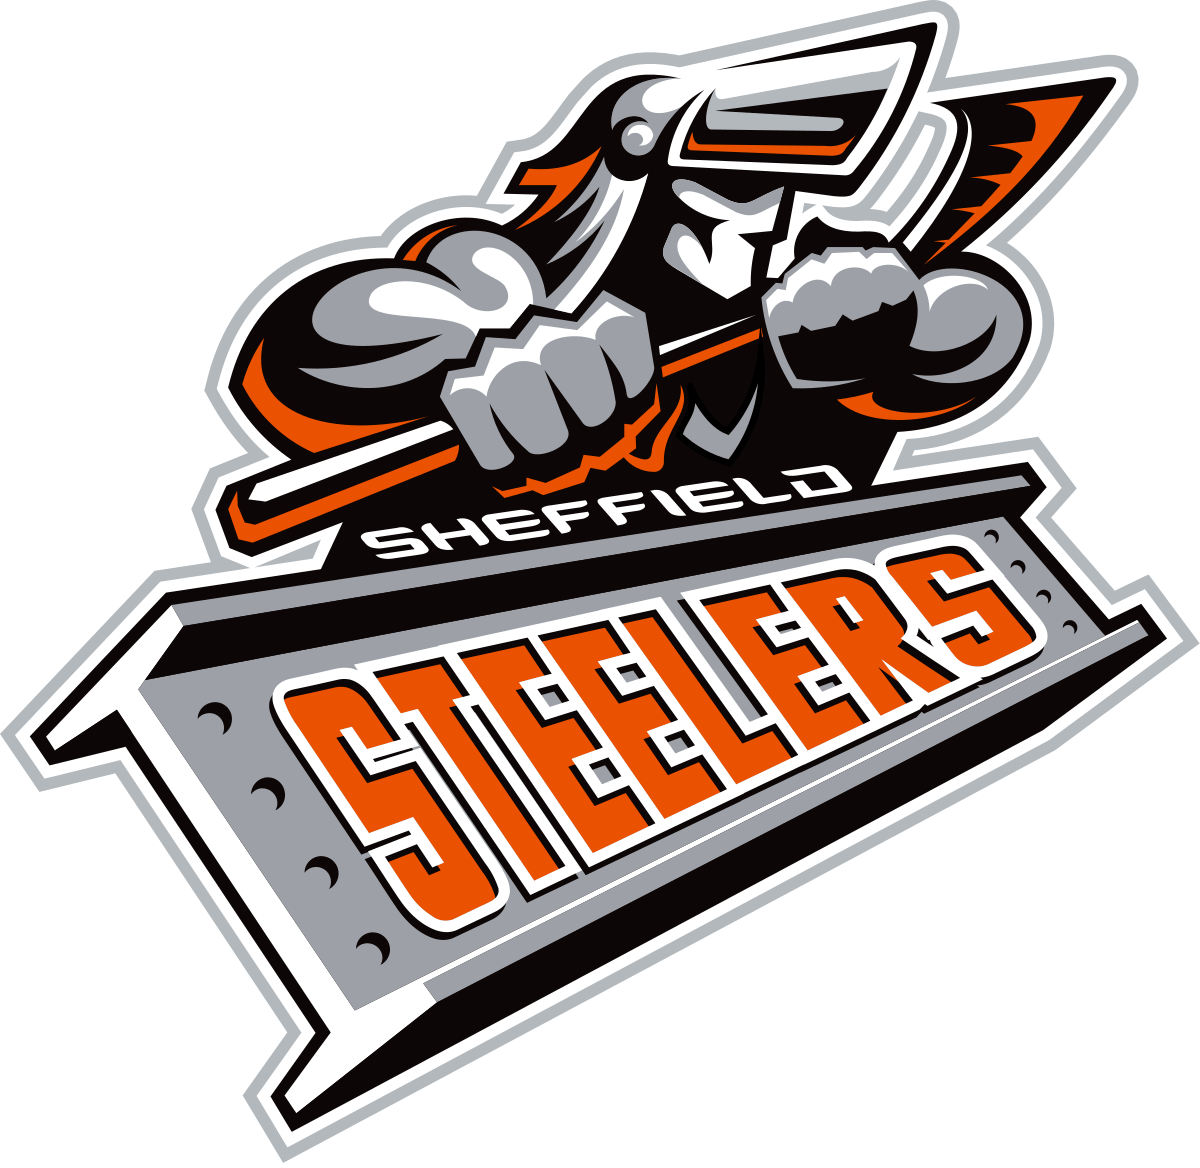 Transparent Background Steelers Logo Images